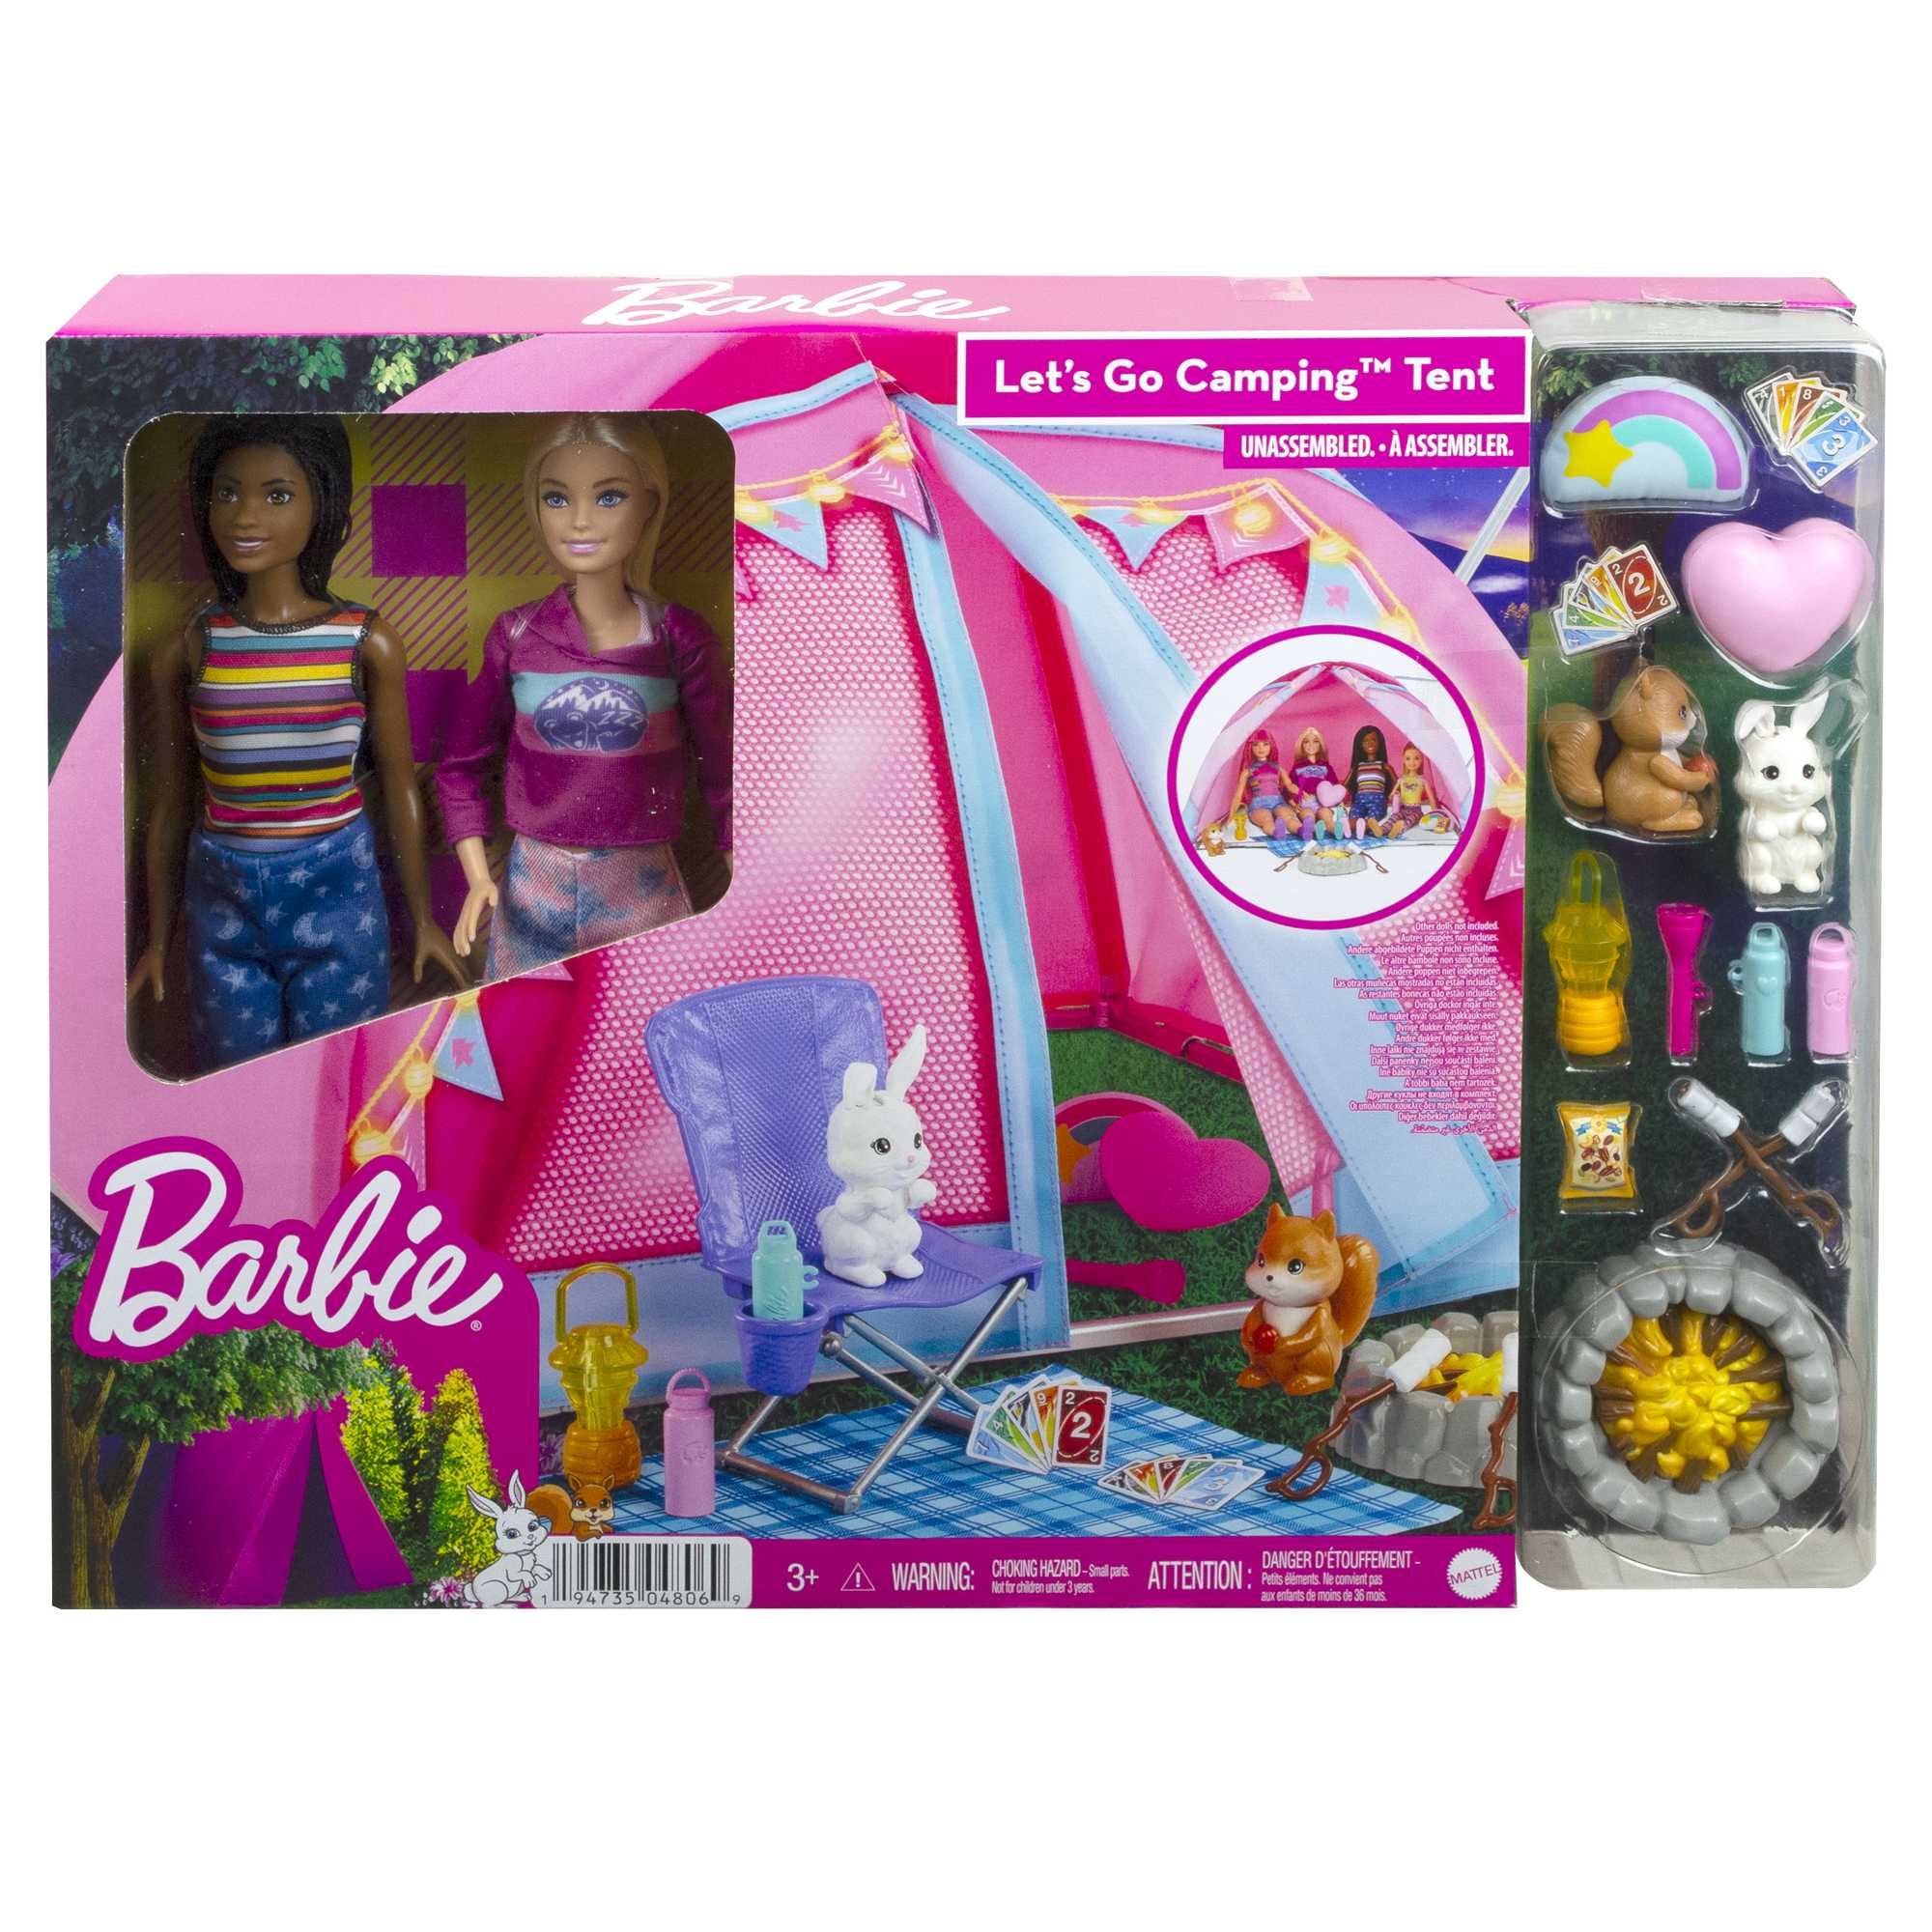 Barbie Let's Go Camping Tent, HGC18